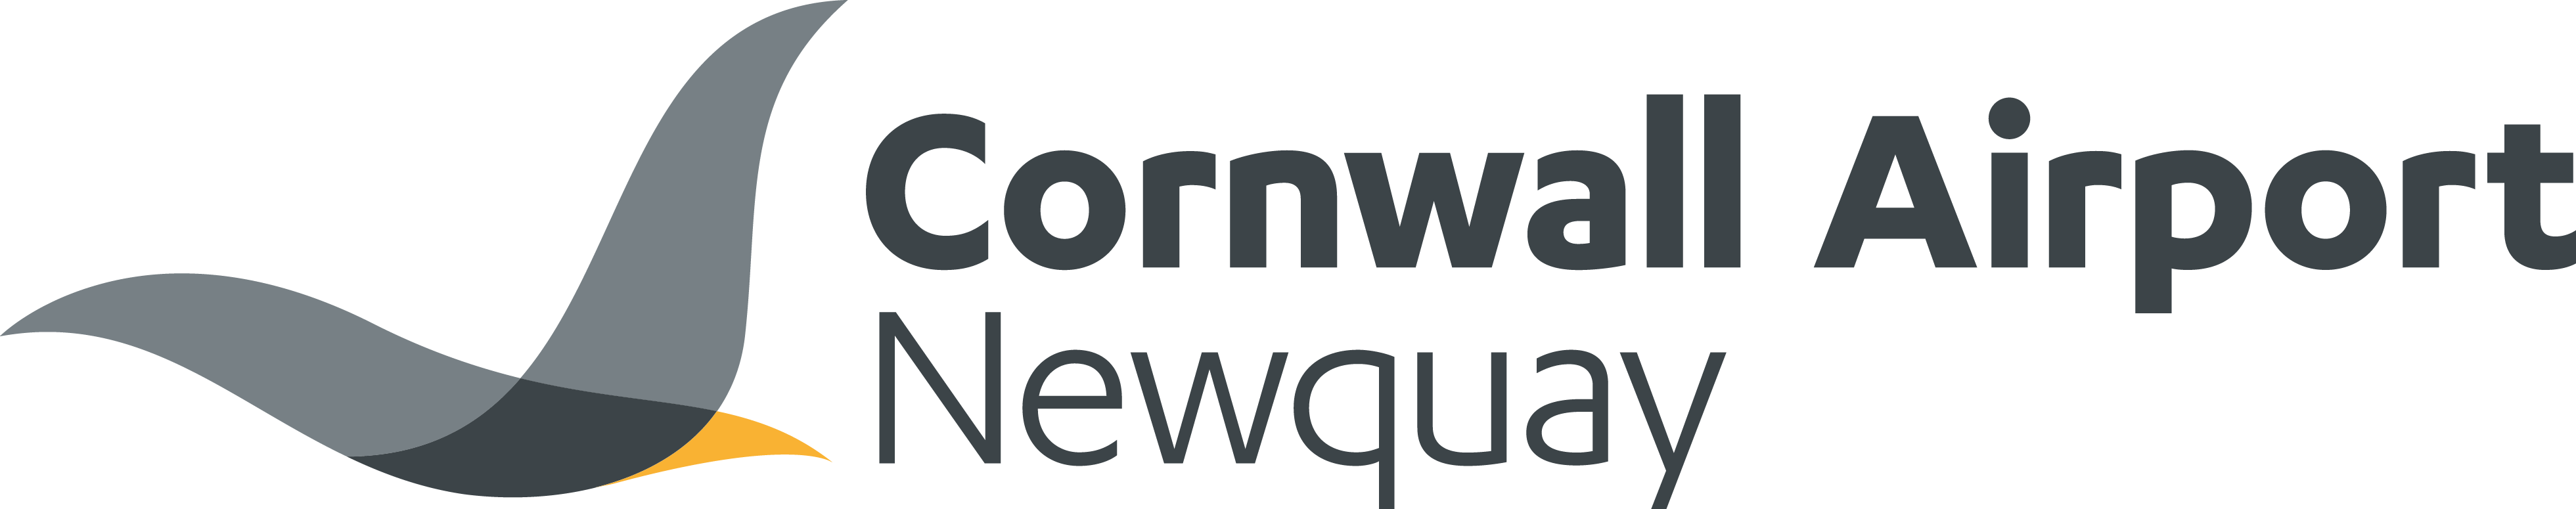 Advertising Agency Cornwall Cornwall Airport Newquay